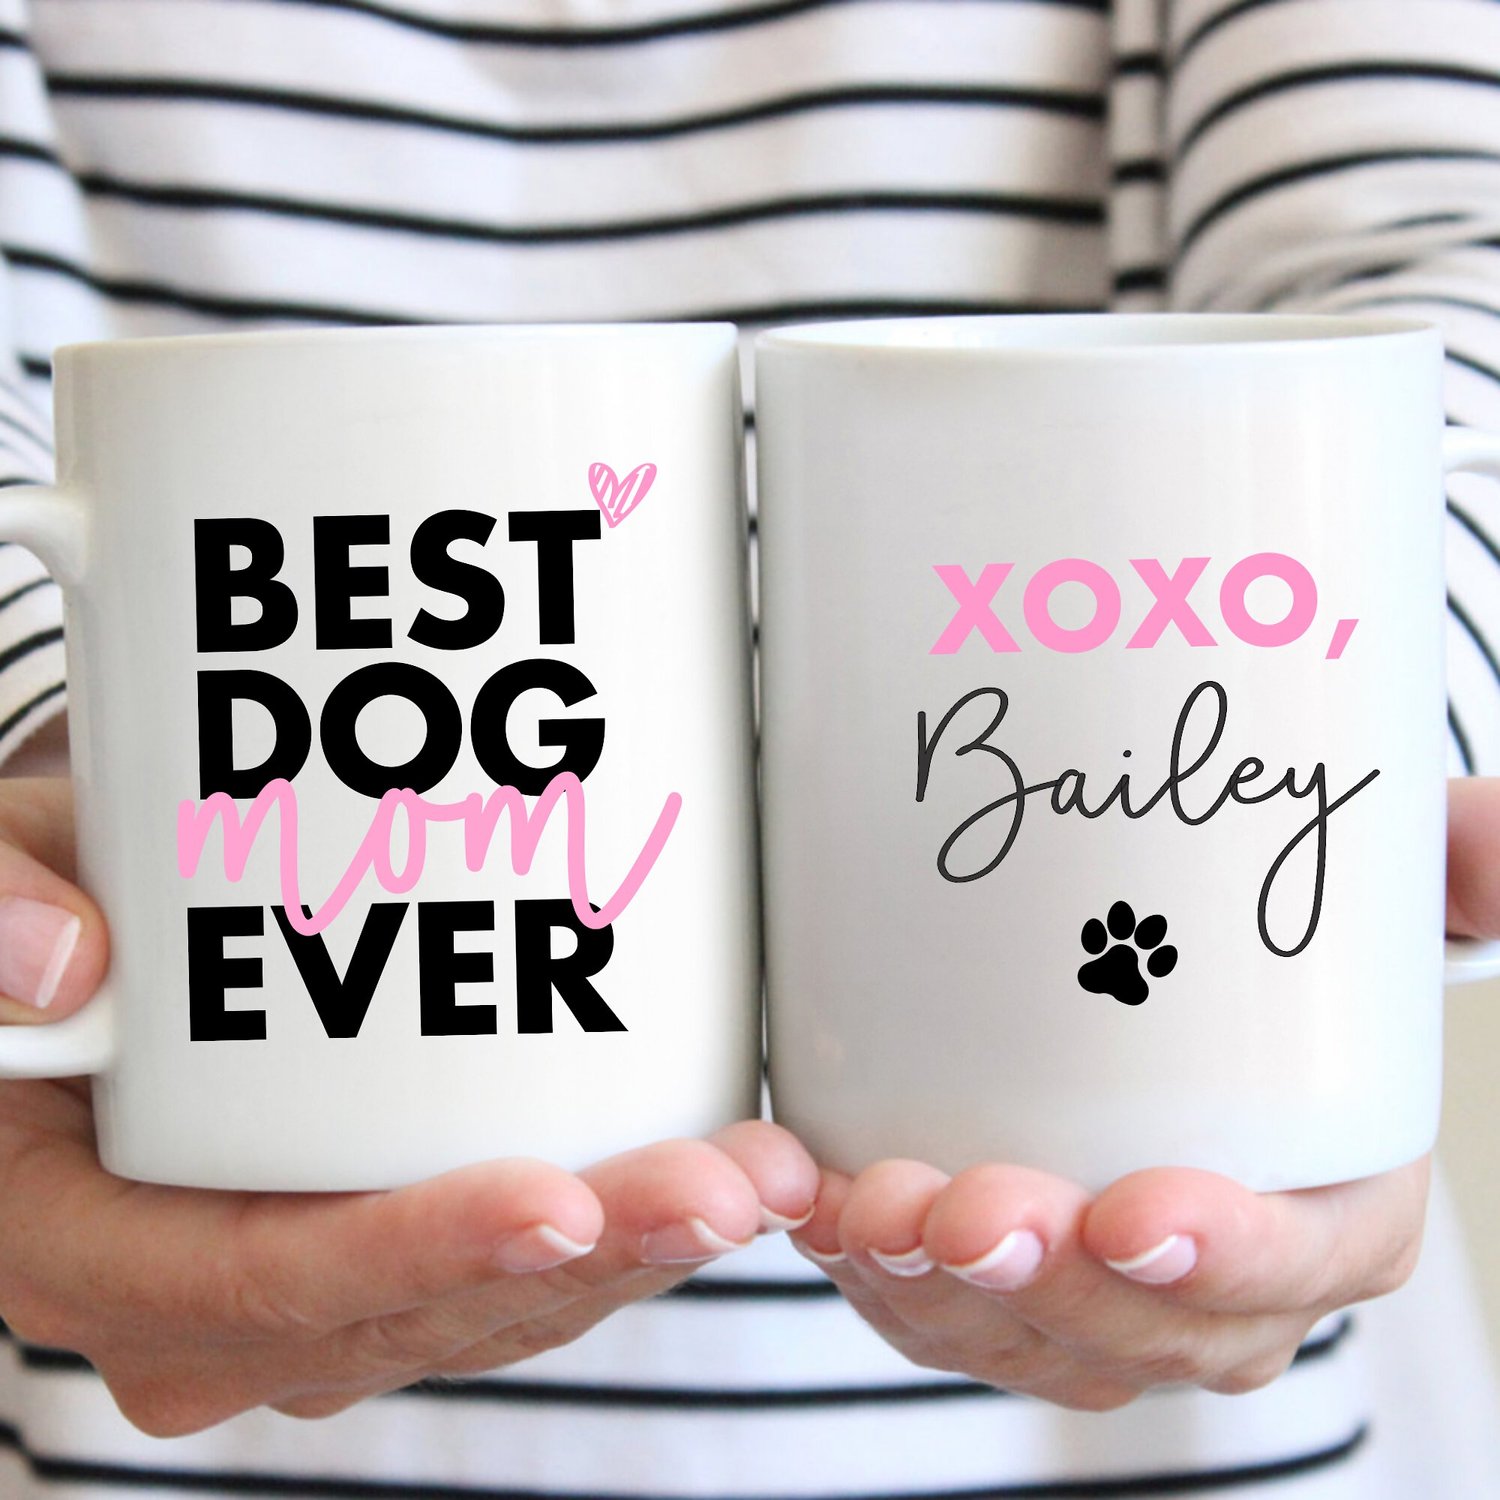 Best Dog Mom Ever - Mugs